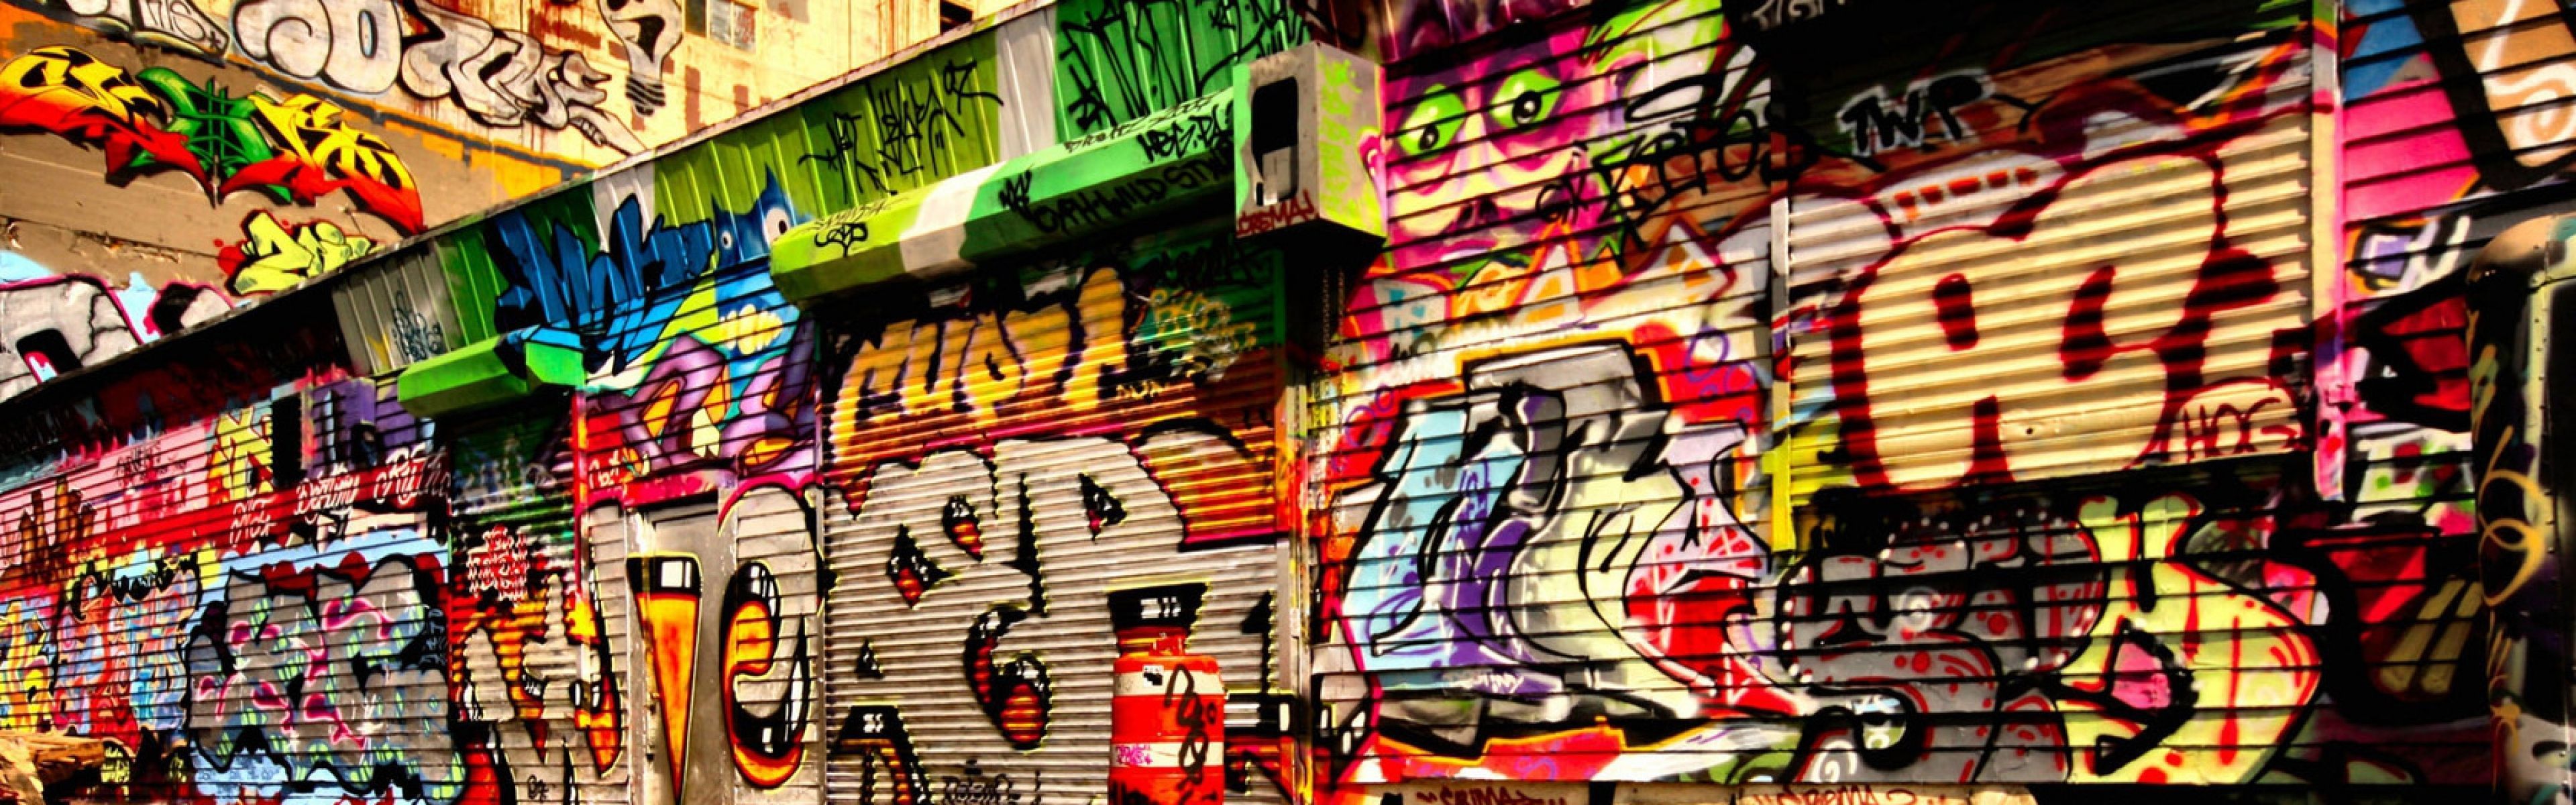 Dual Wide Graffiti Wallpapers HD, Desktop Backgrounds 3840x1200